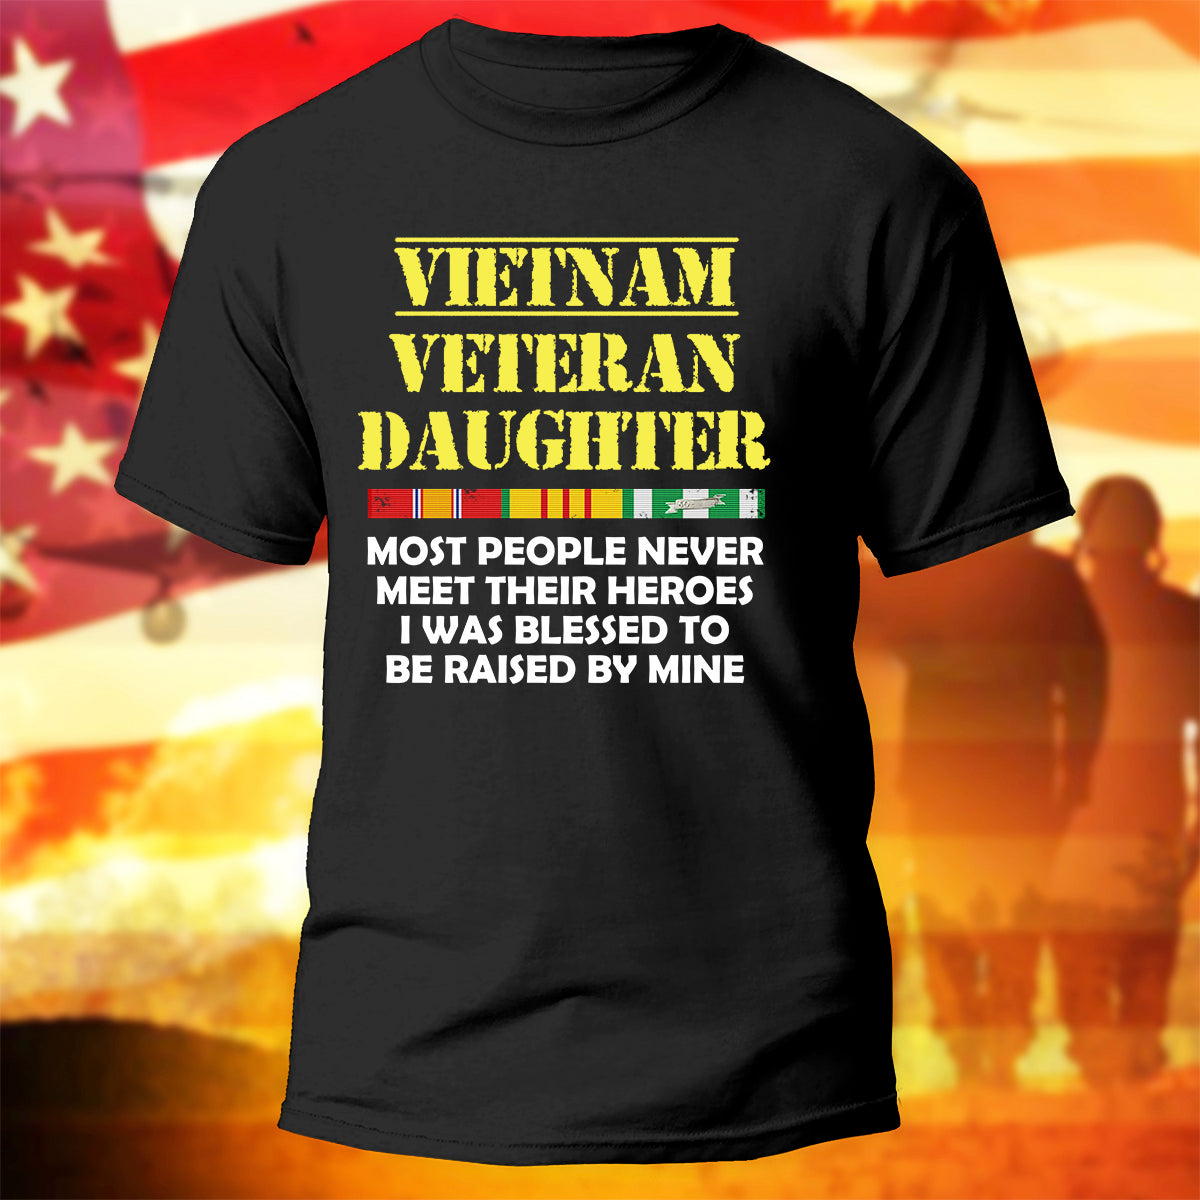 Vietnam Veteran Daughter T-Shirt Most People Never Meet Their Hero I Raised Mine Shirt Veteran's Daughter Gift